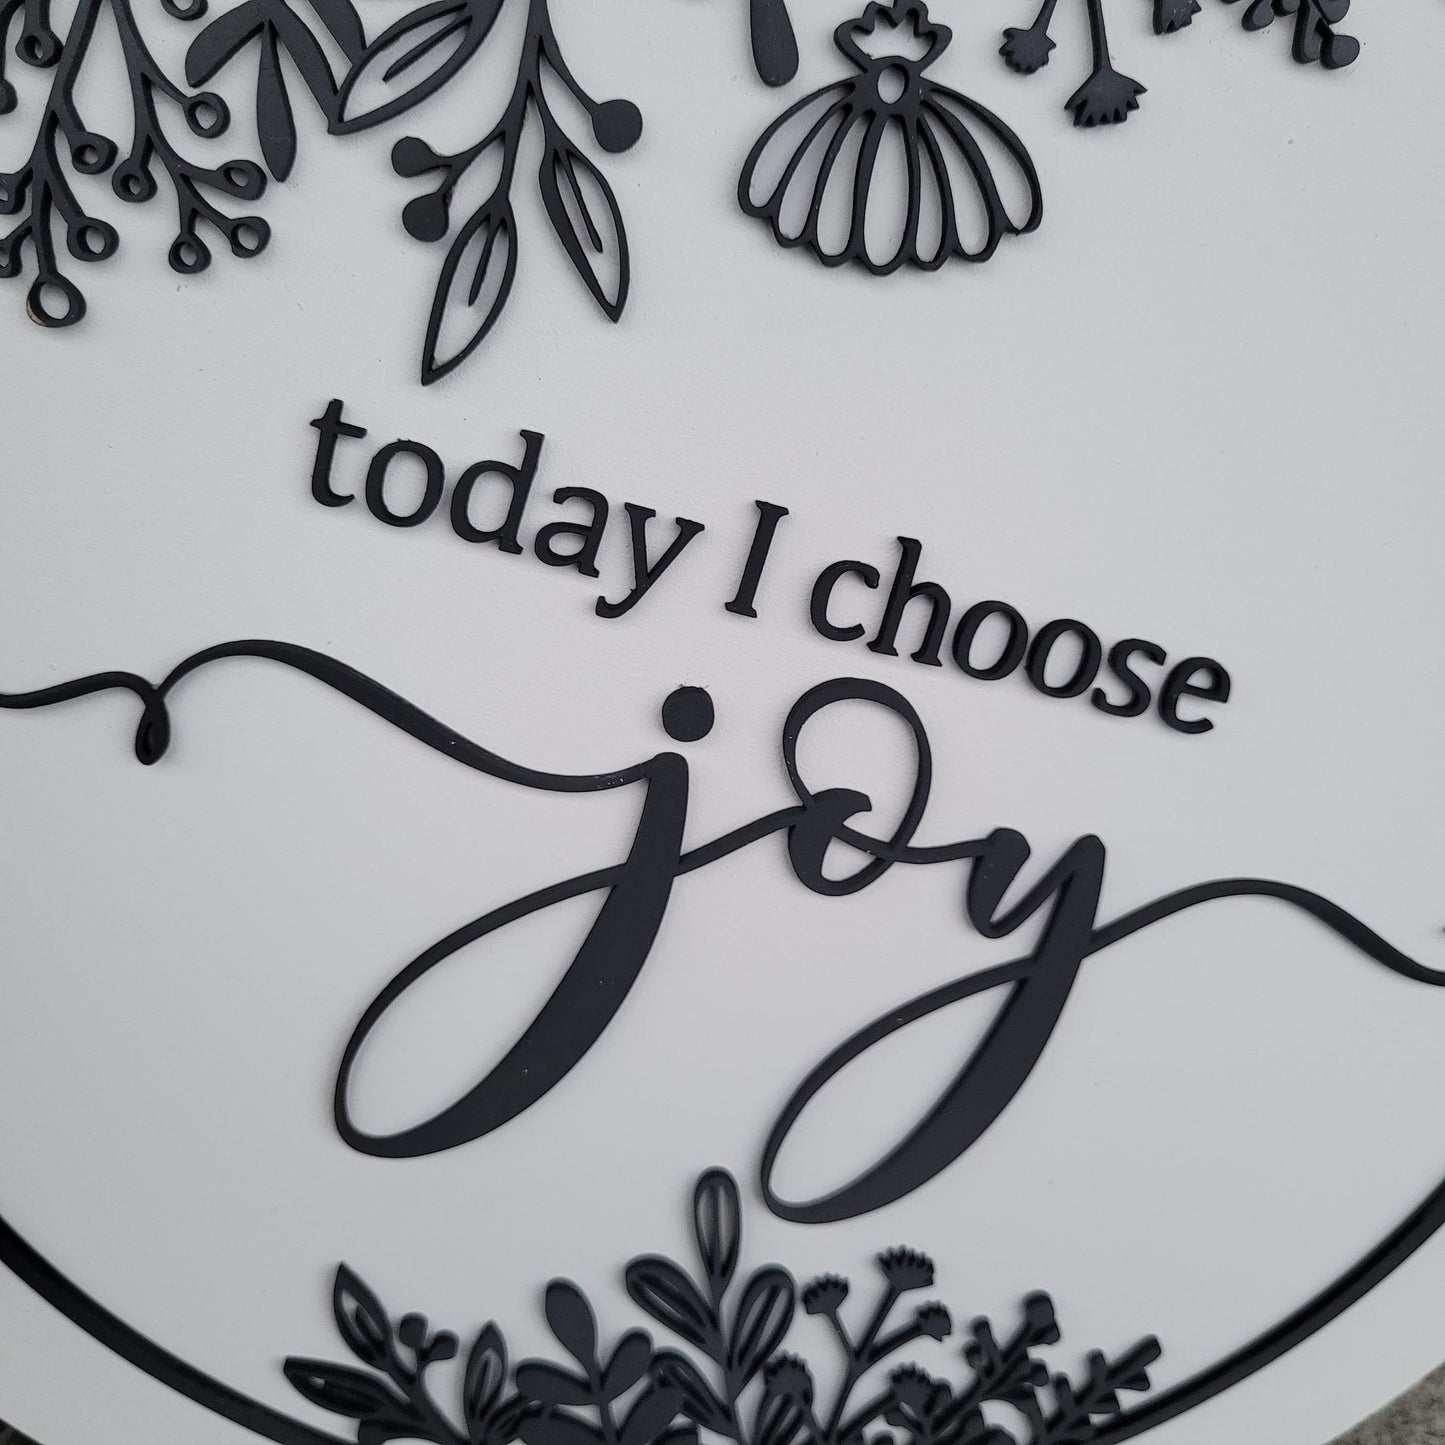 Today I Choose Joy - 3D Round